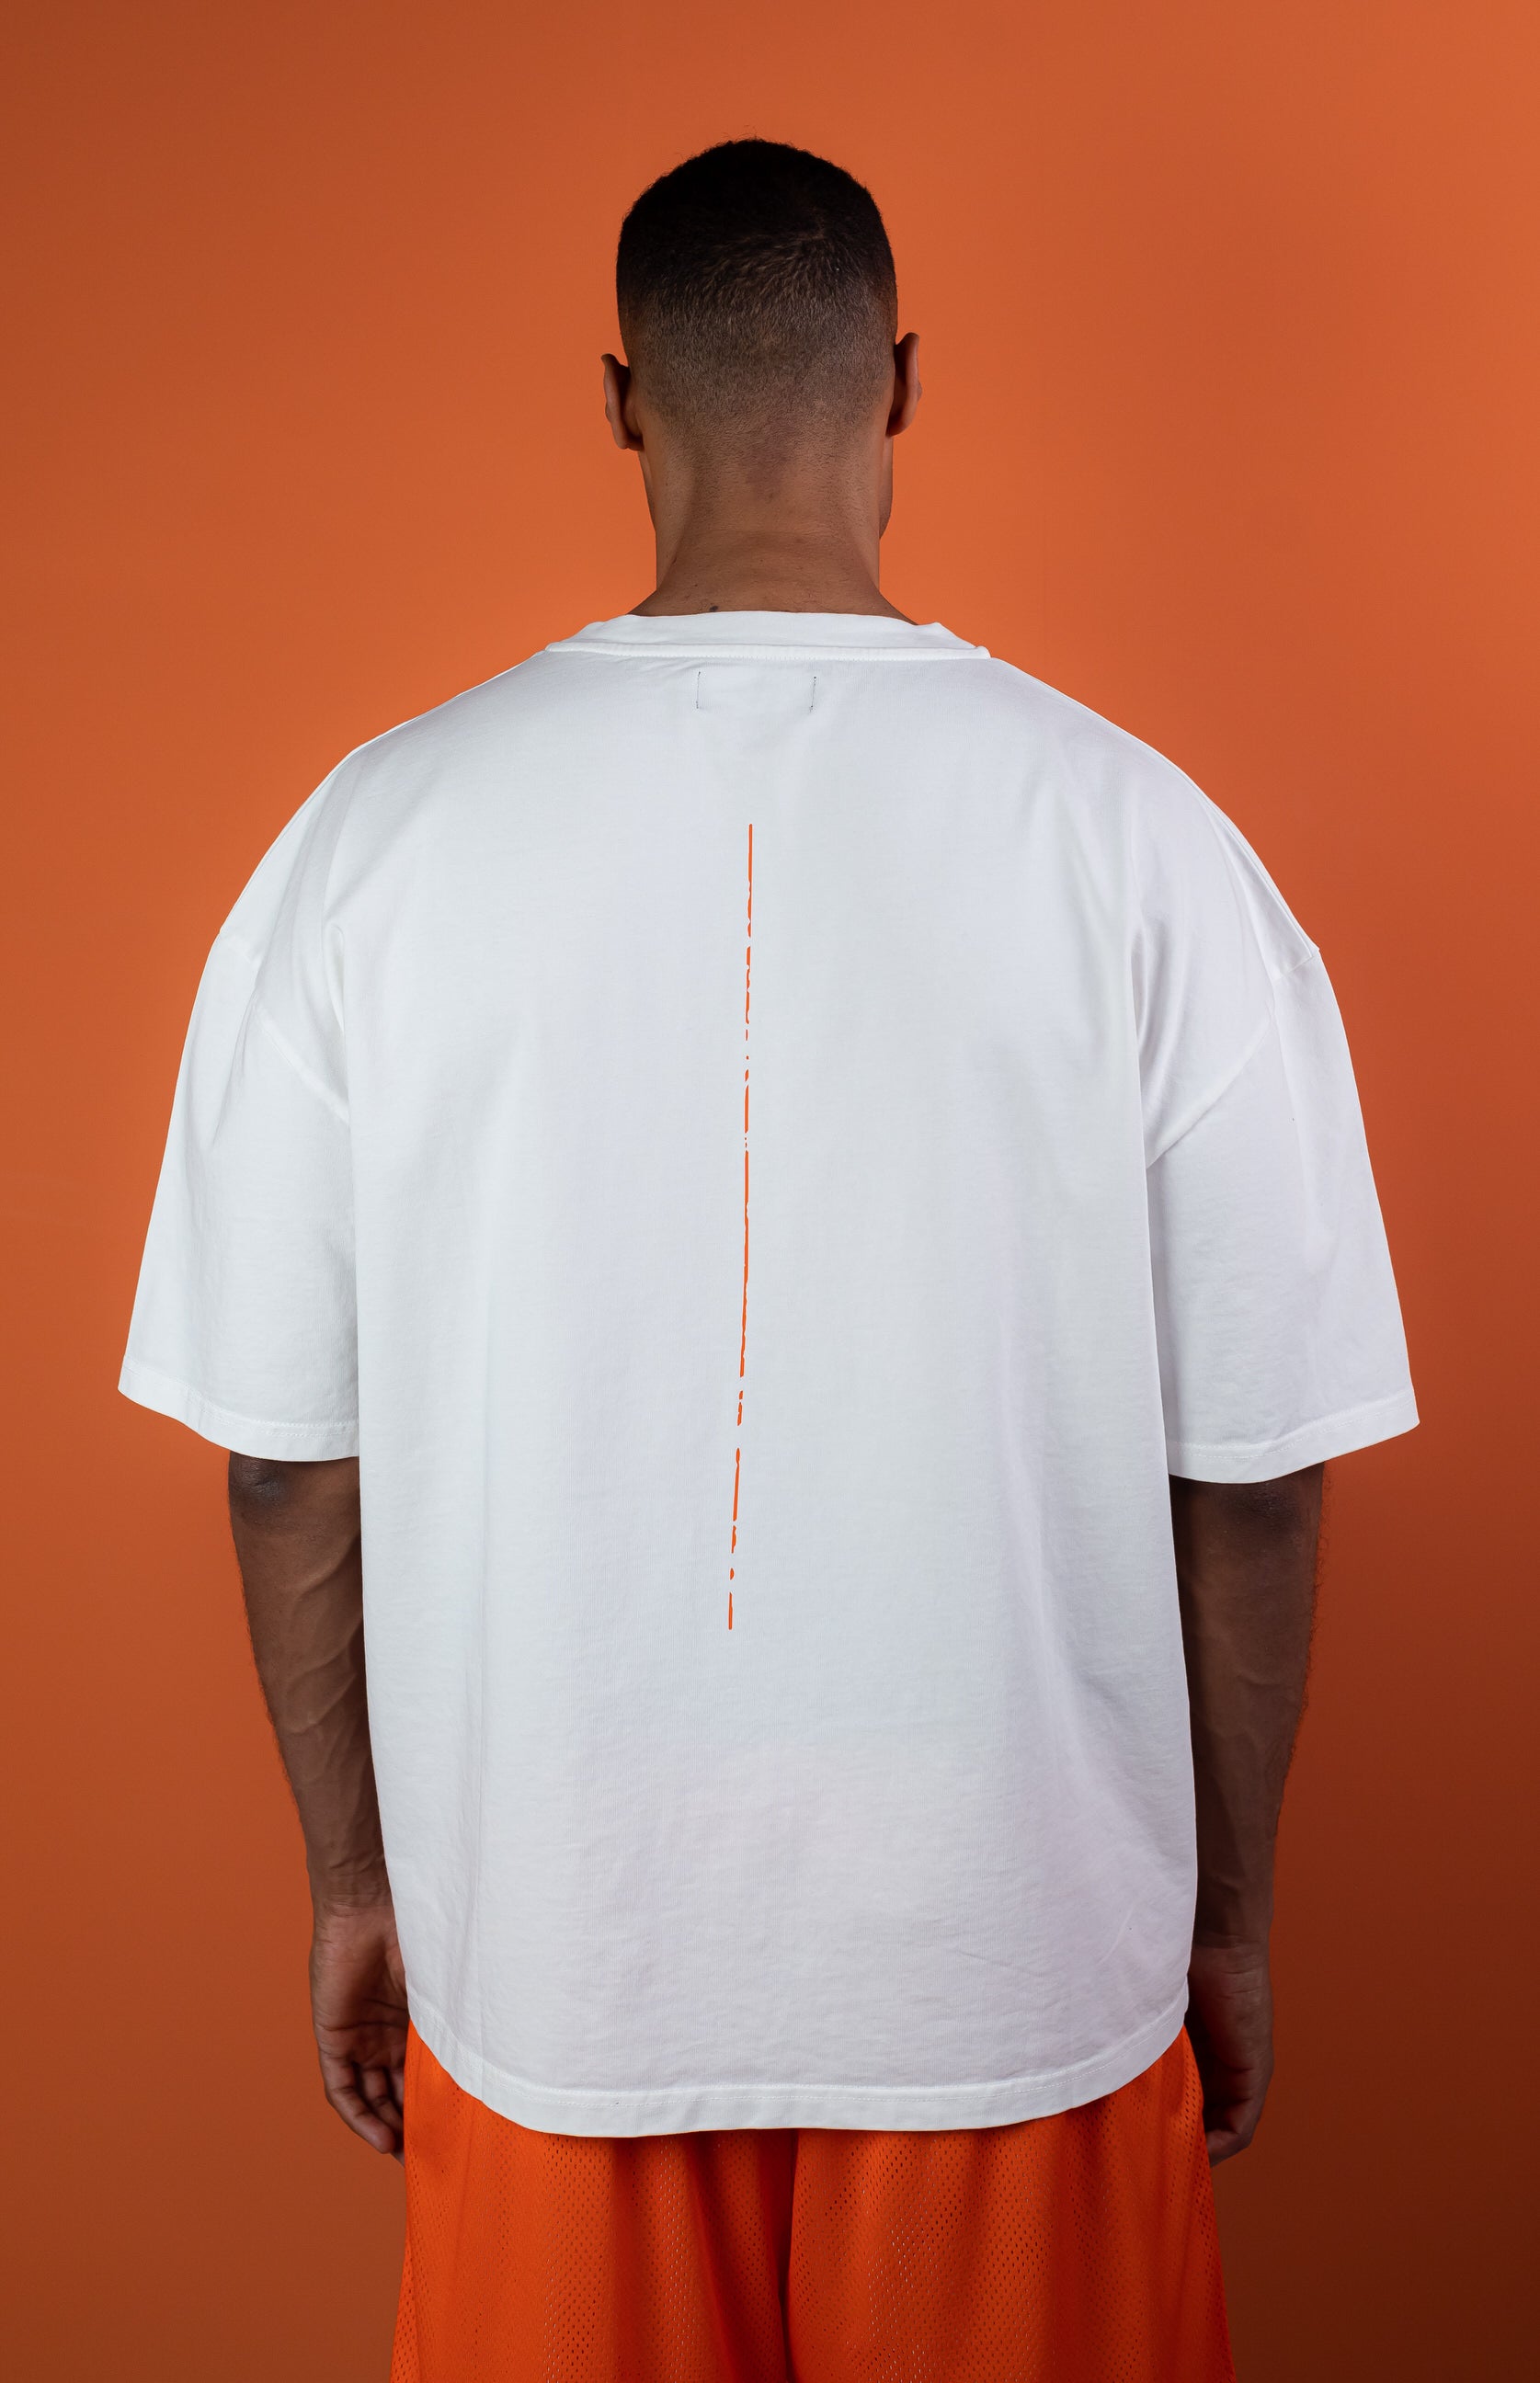 Male Model wearing White oversize tshirt with orange trace on the back